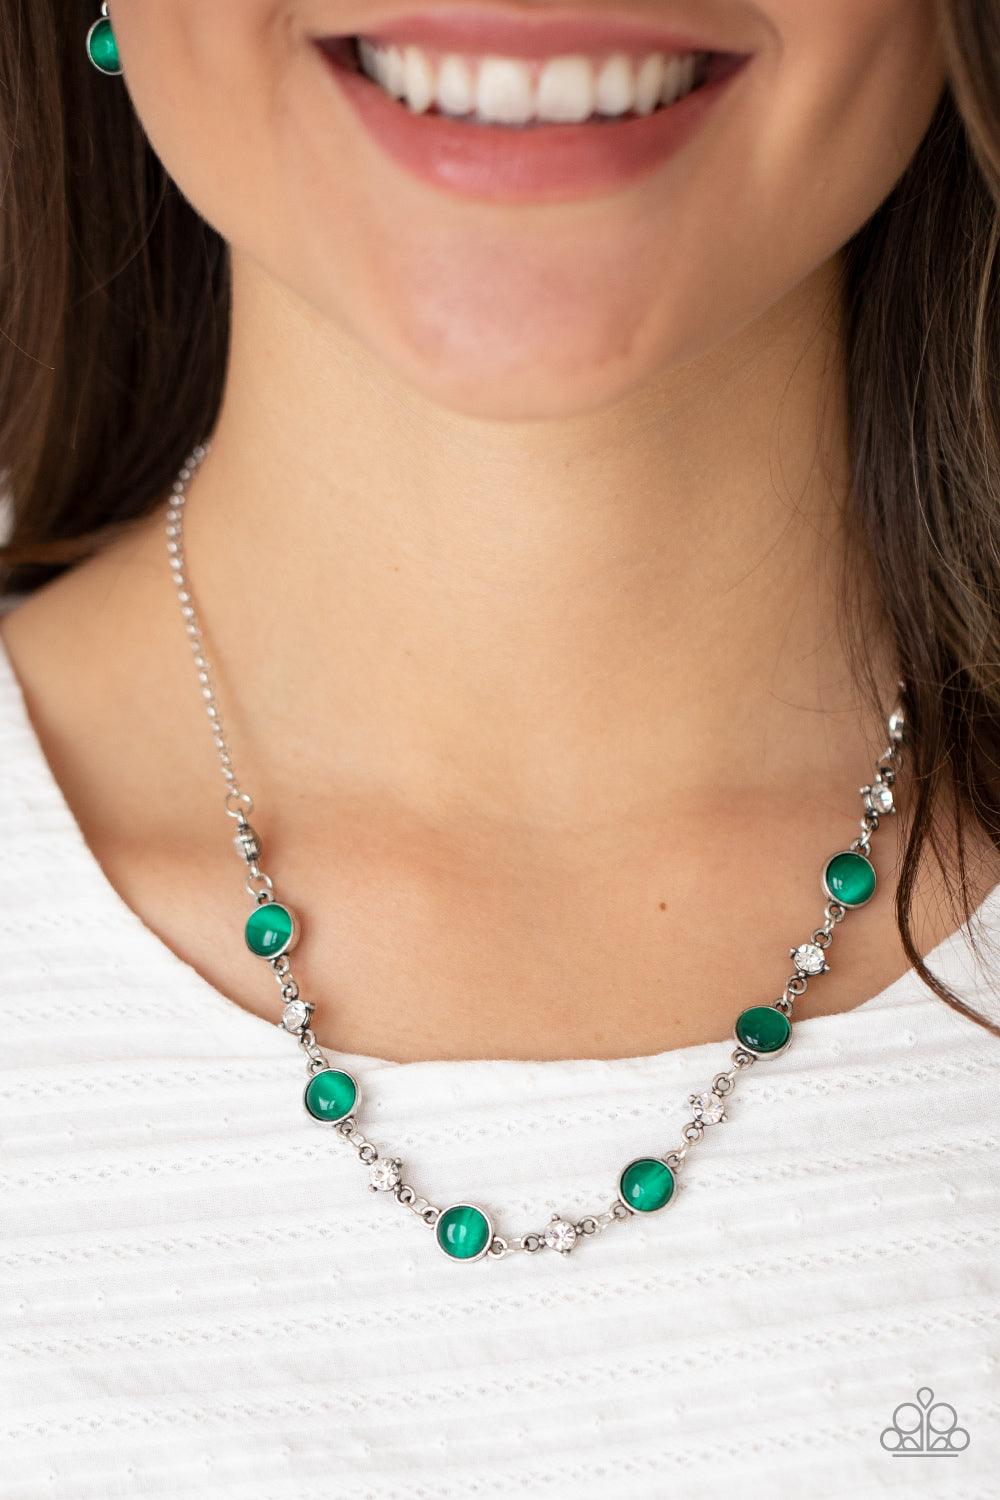 Inner Illumination Green Necklace - Jewelry by Bretta